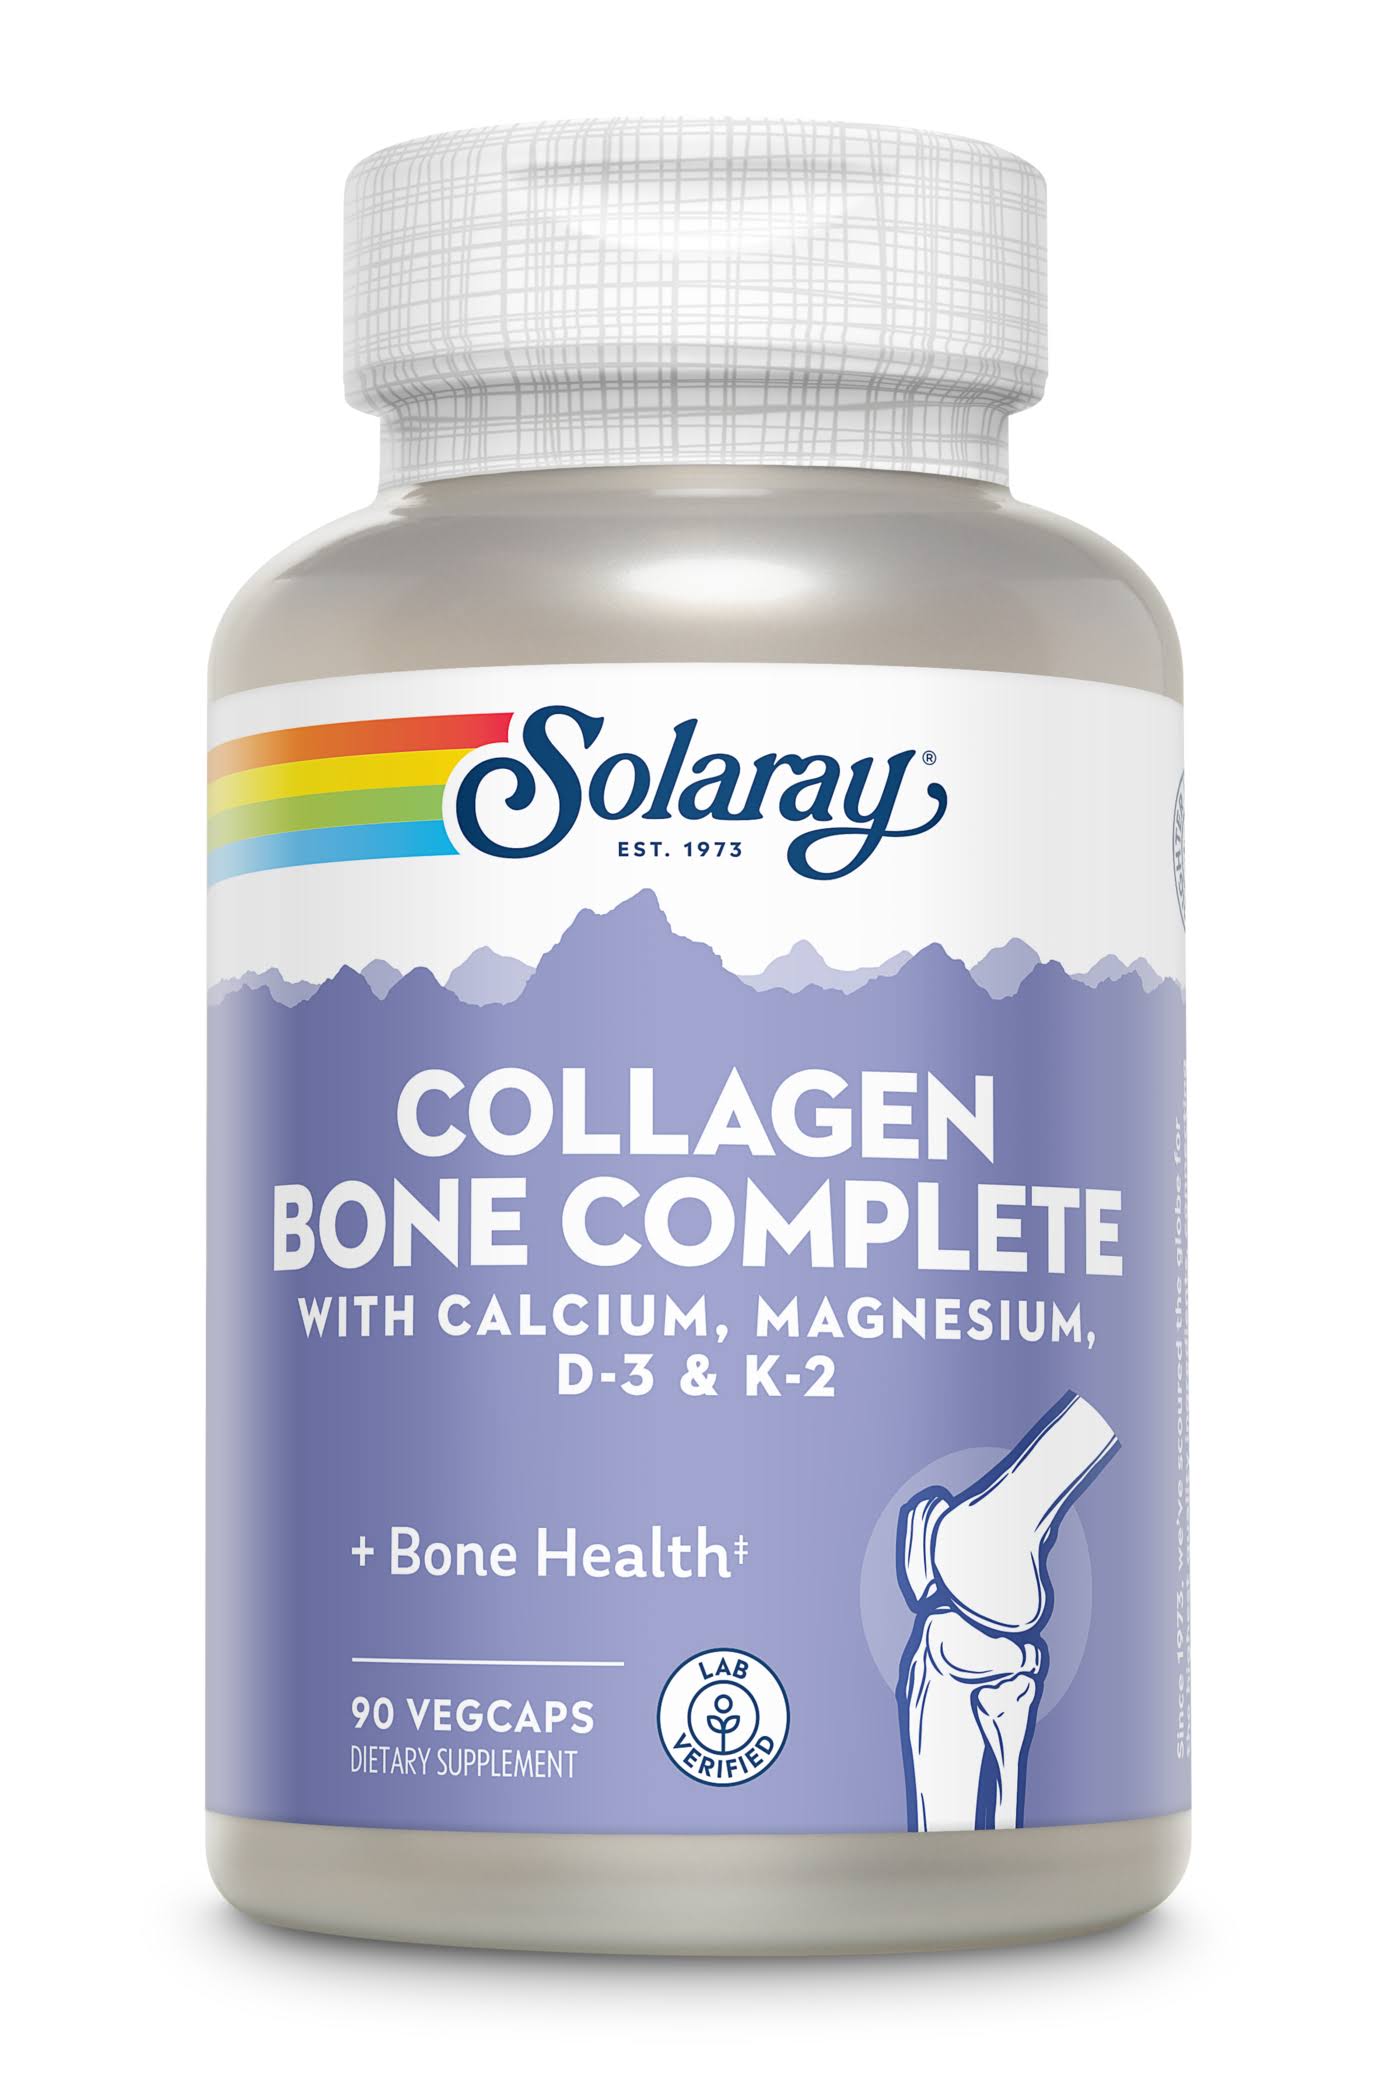 Solaray Collagen Bone Complete, 90 Veg Caps